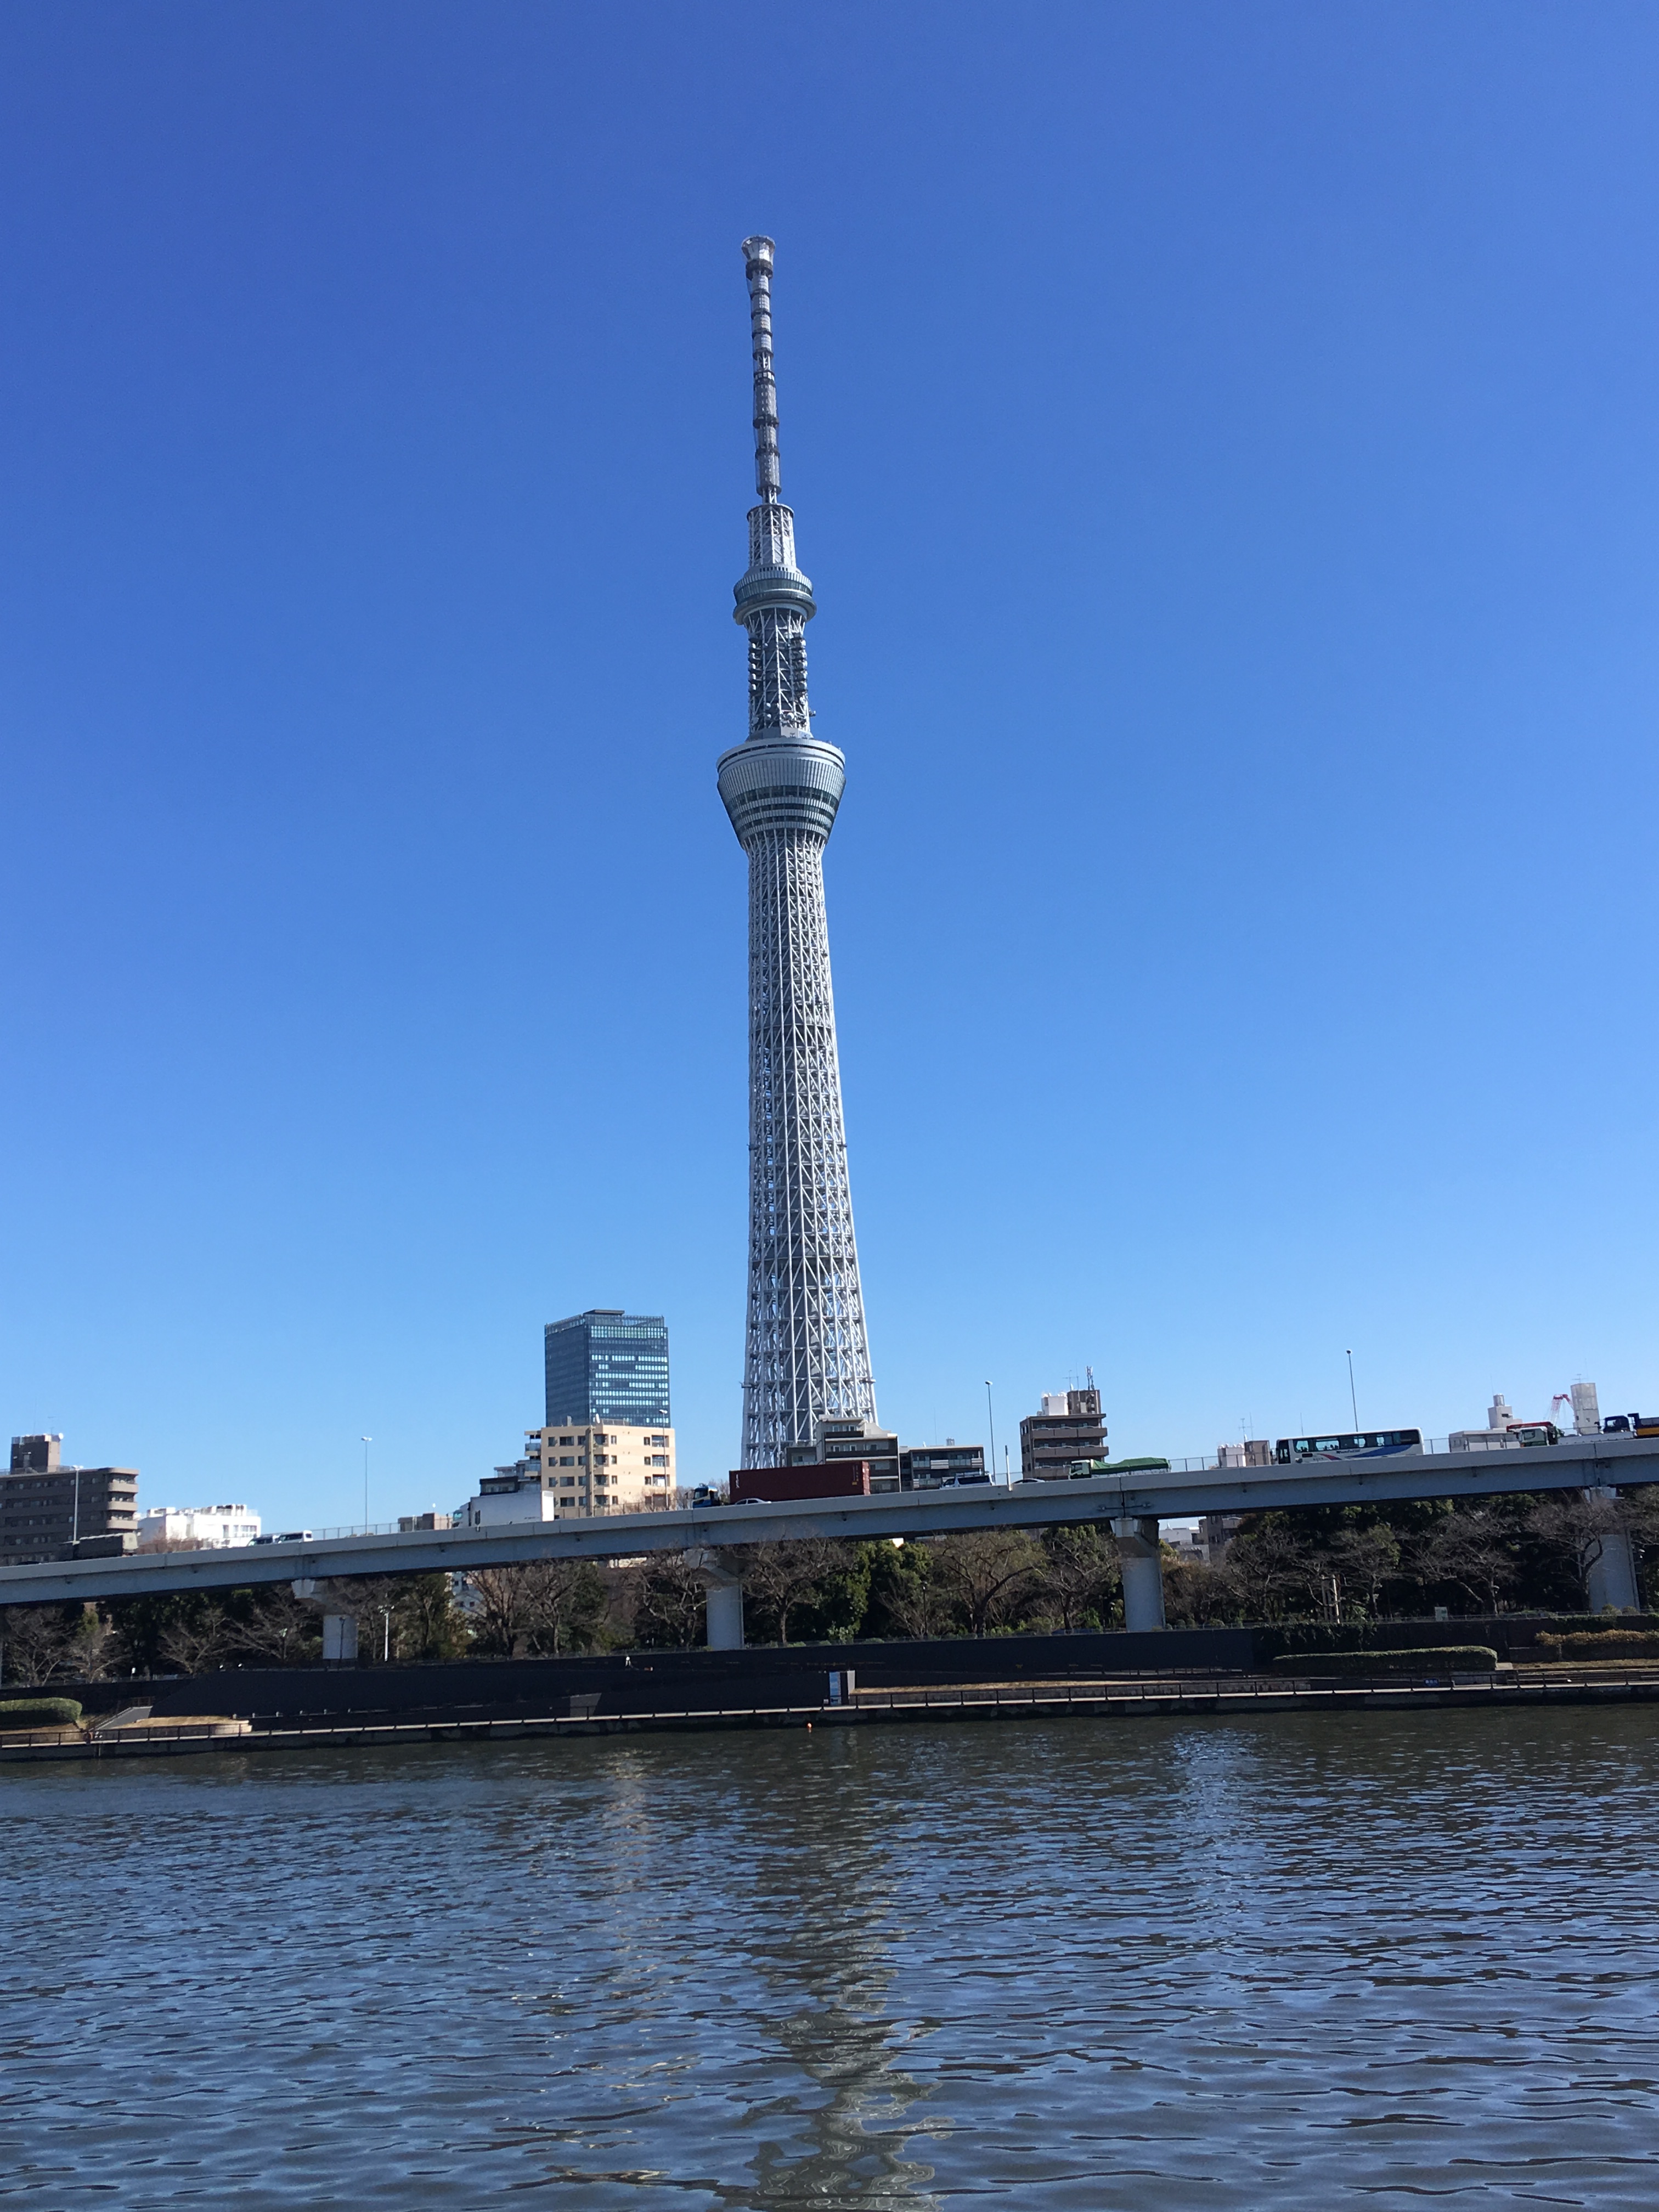 2. Tokyo Sky Tree